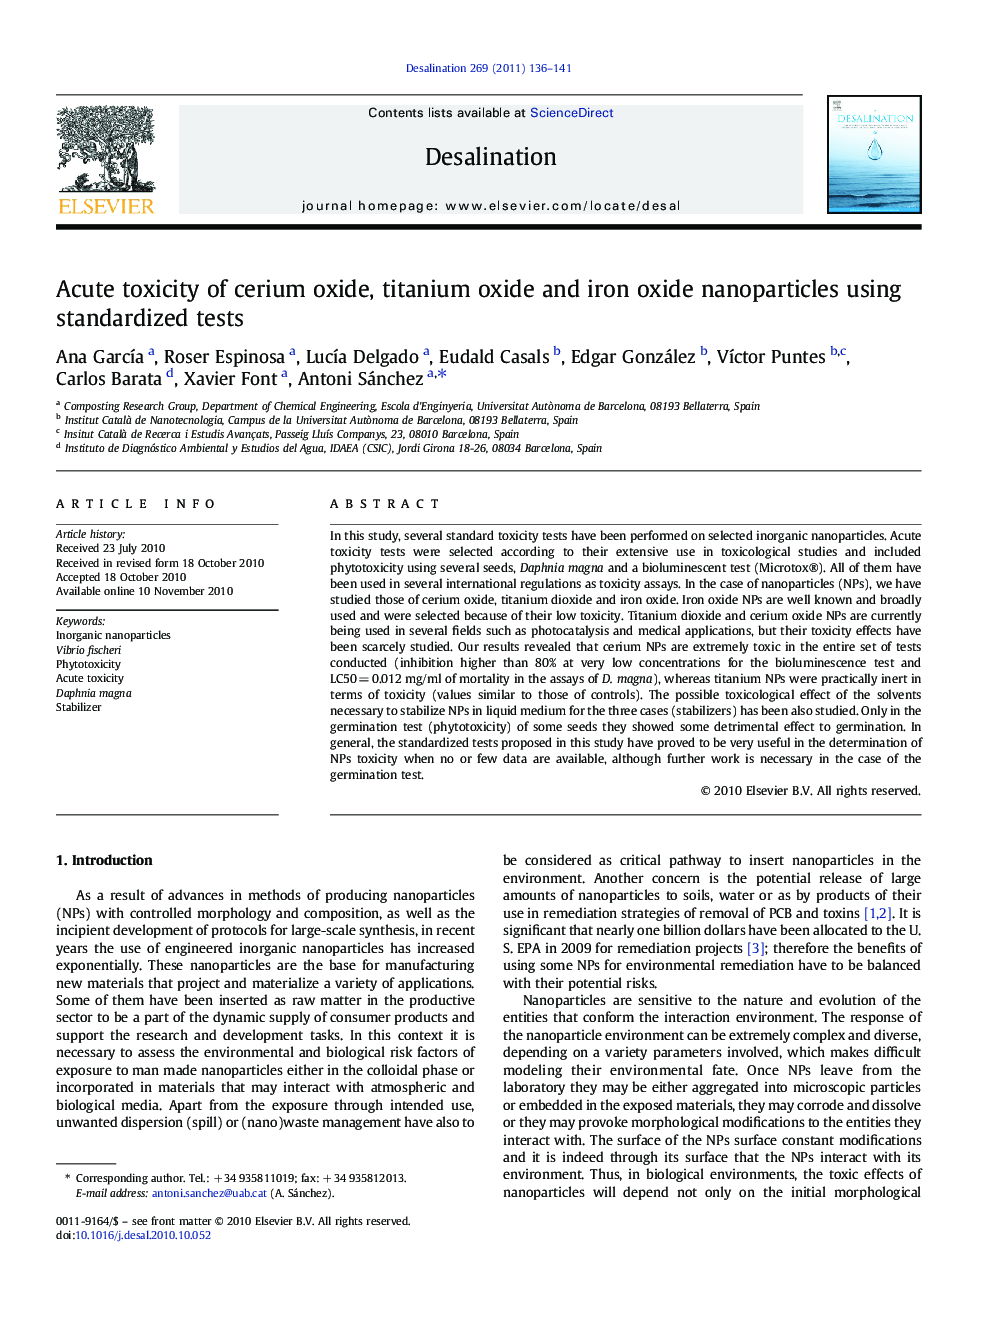 Acute toxicity of cerium oxide, titanium oxide and iron oxide nanoparticles using standardized tests